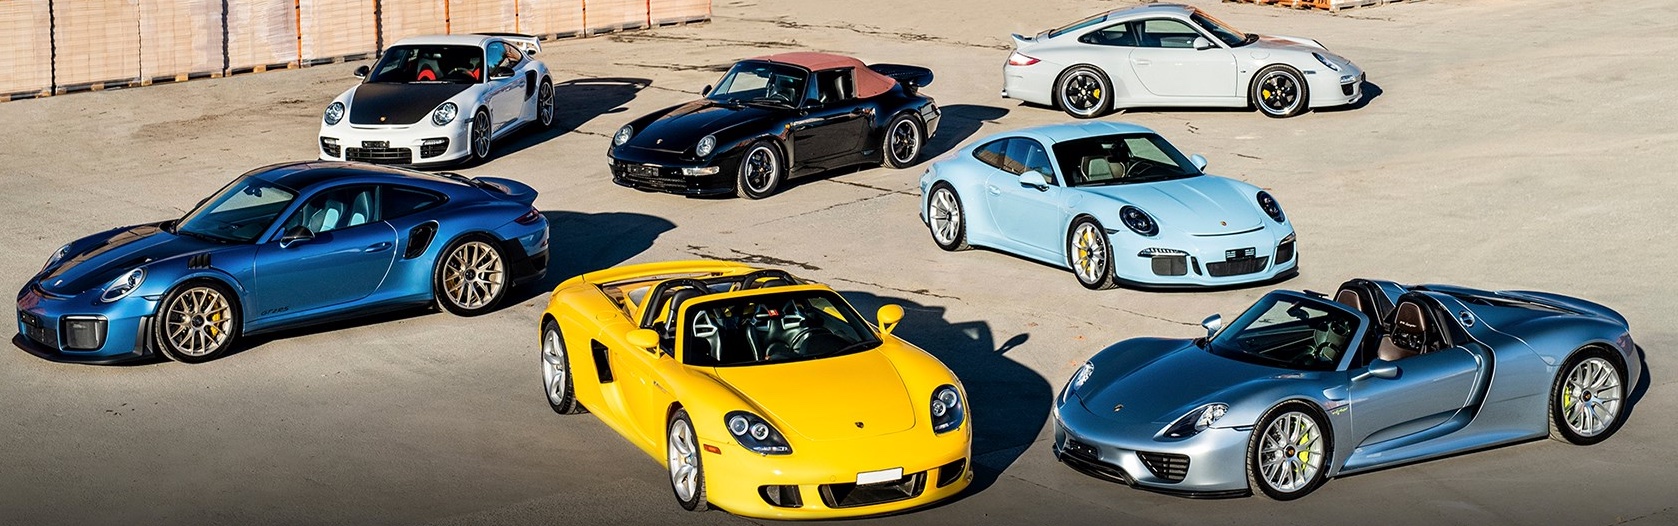 More than 3 million euros for the Swiss Porsche Group